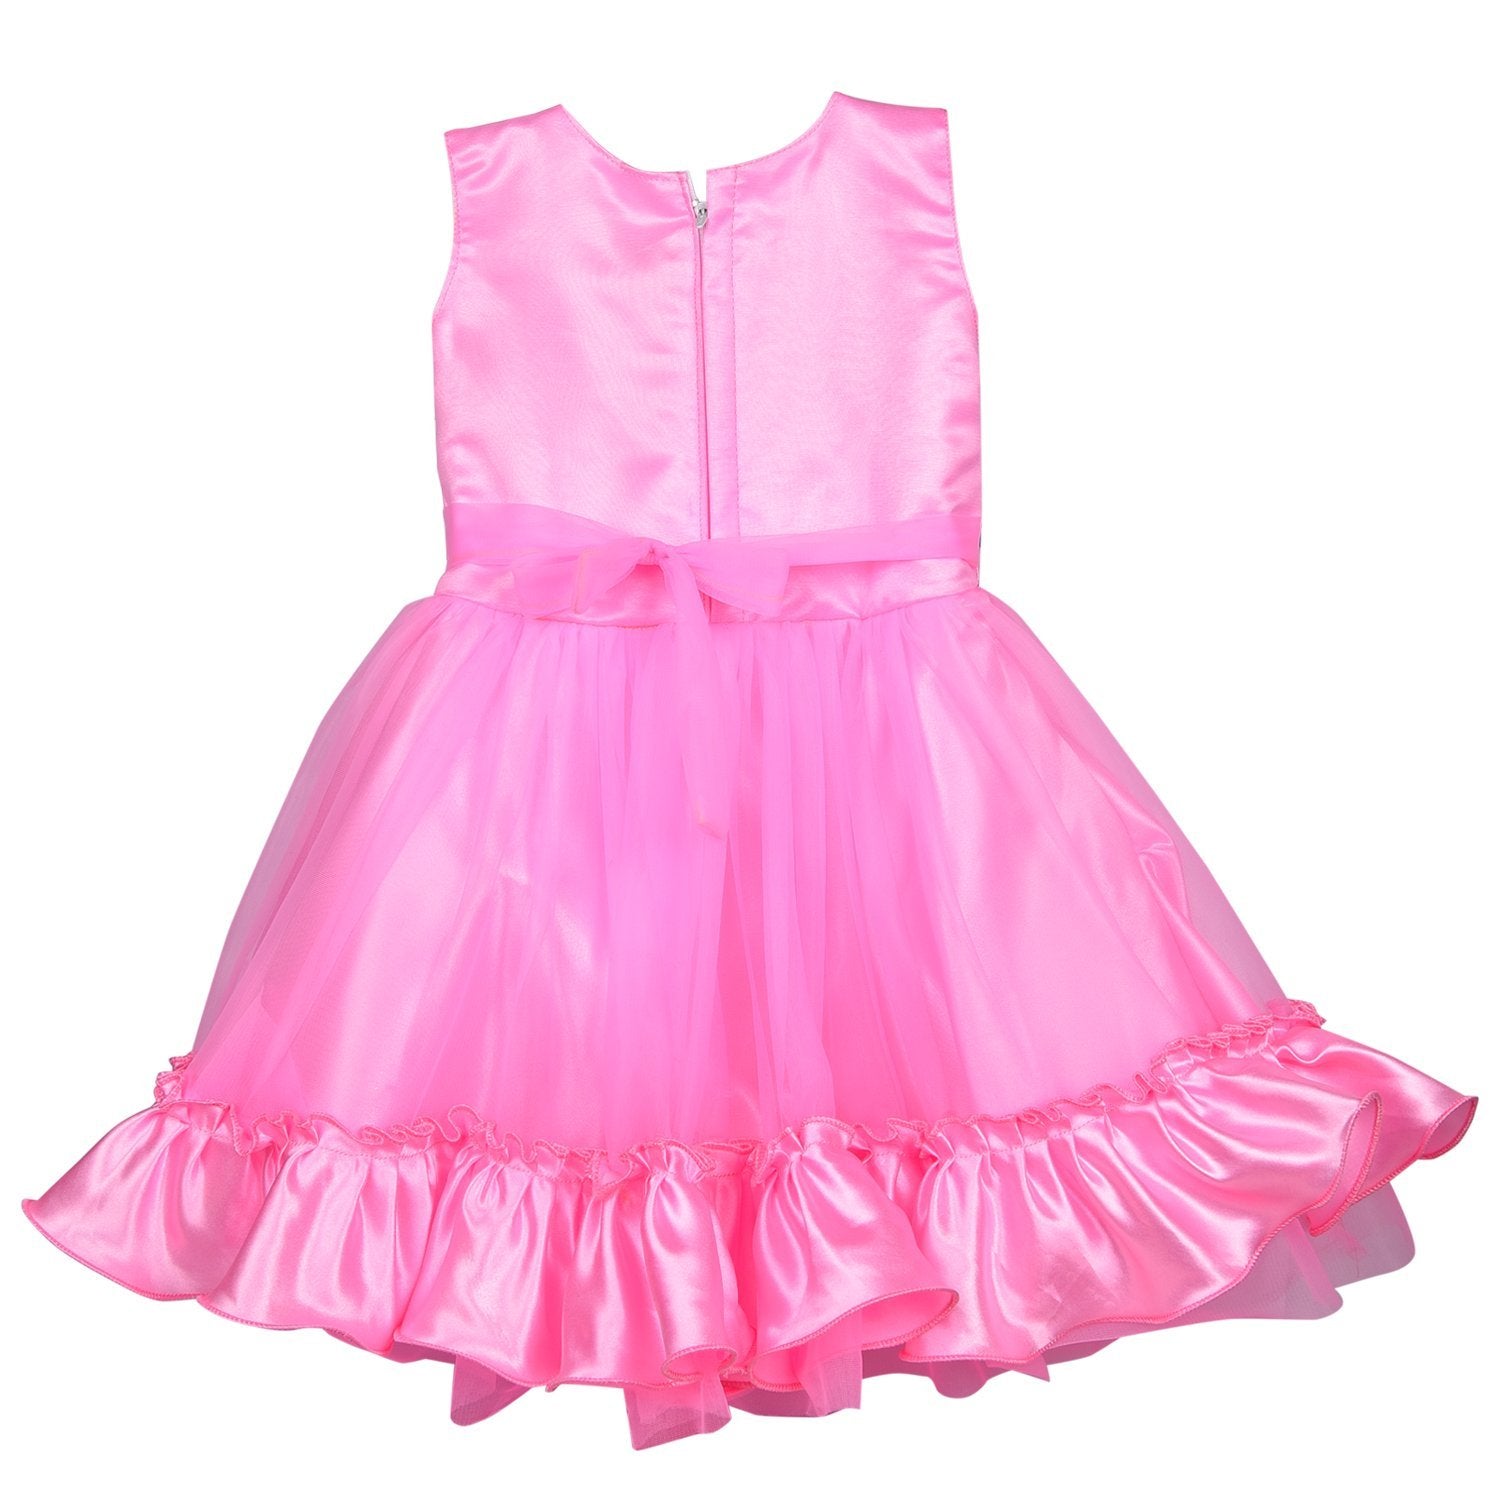 Baby Girls Party Wear Frock Dress fr130pnk -  Wish Karo Dresses